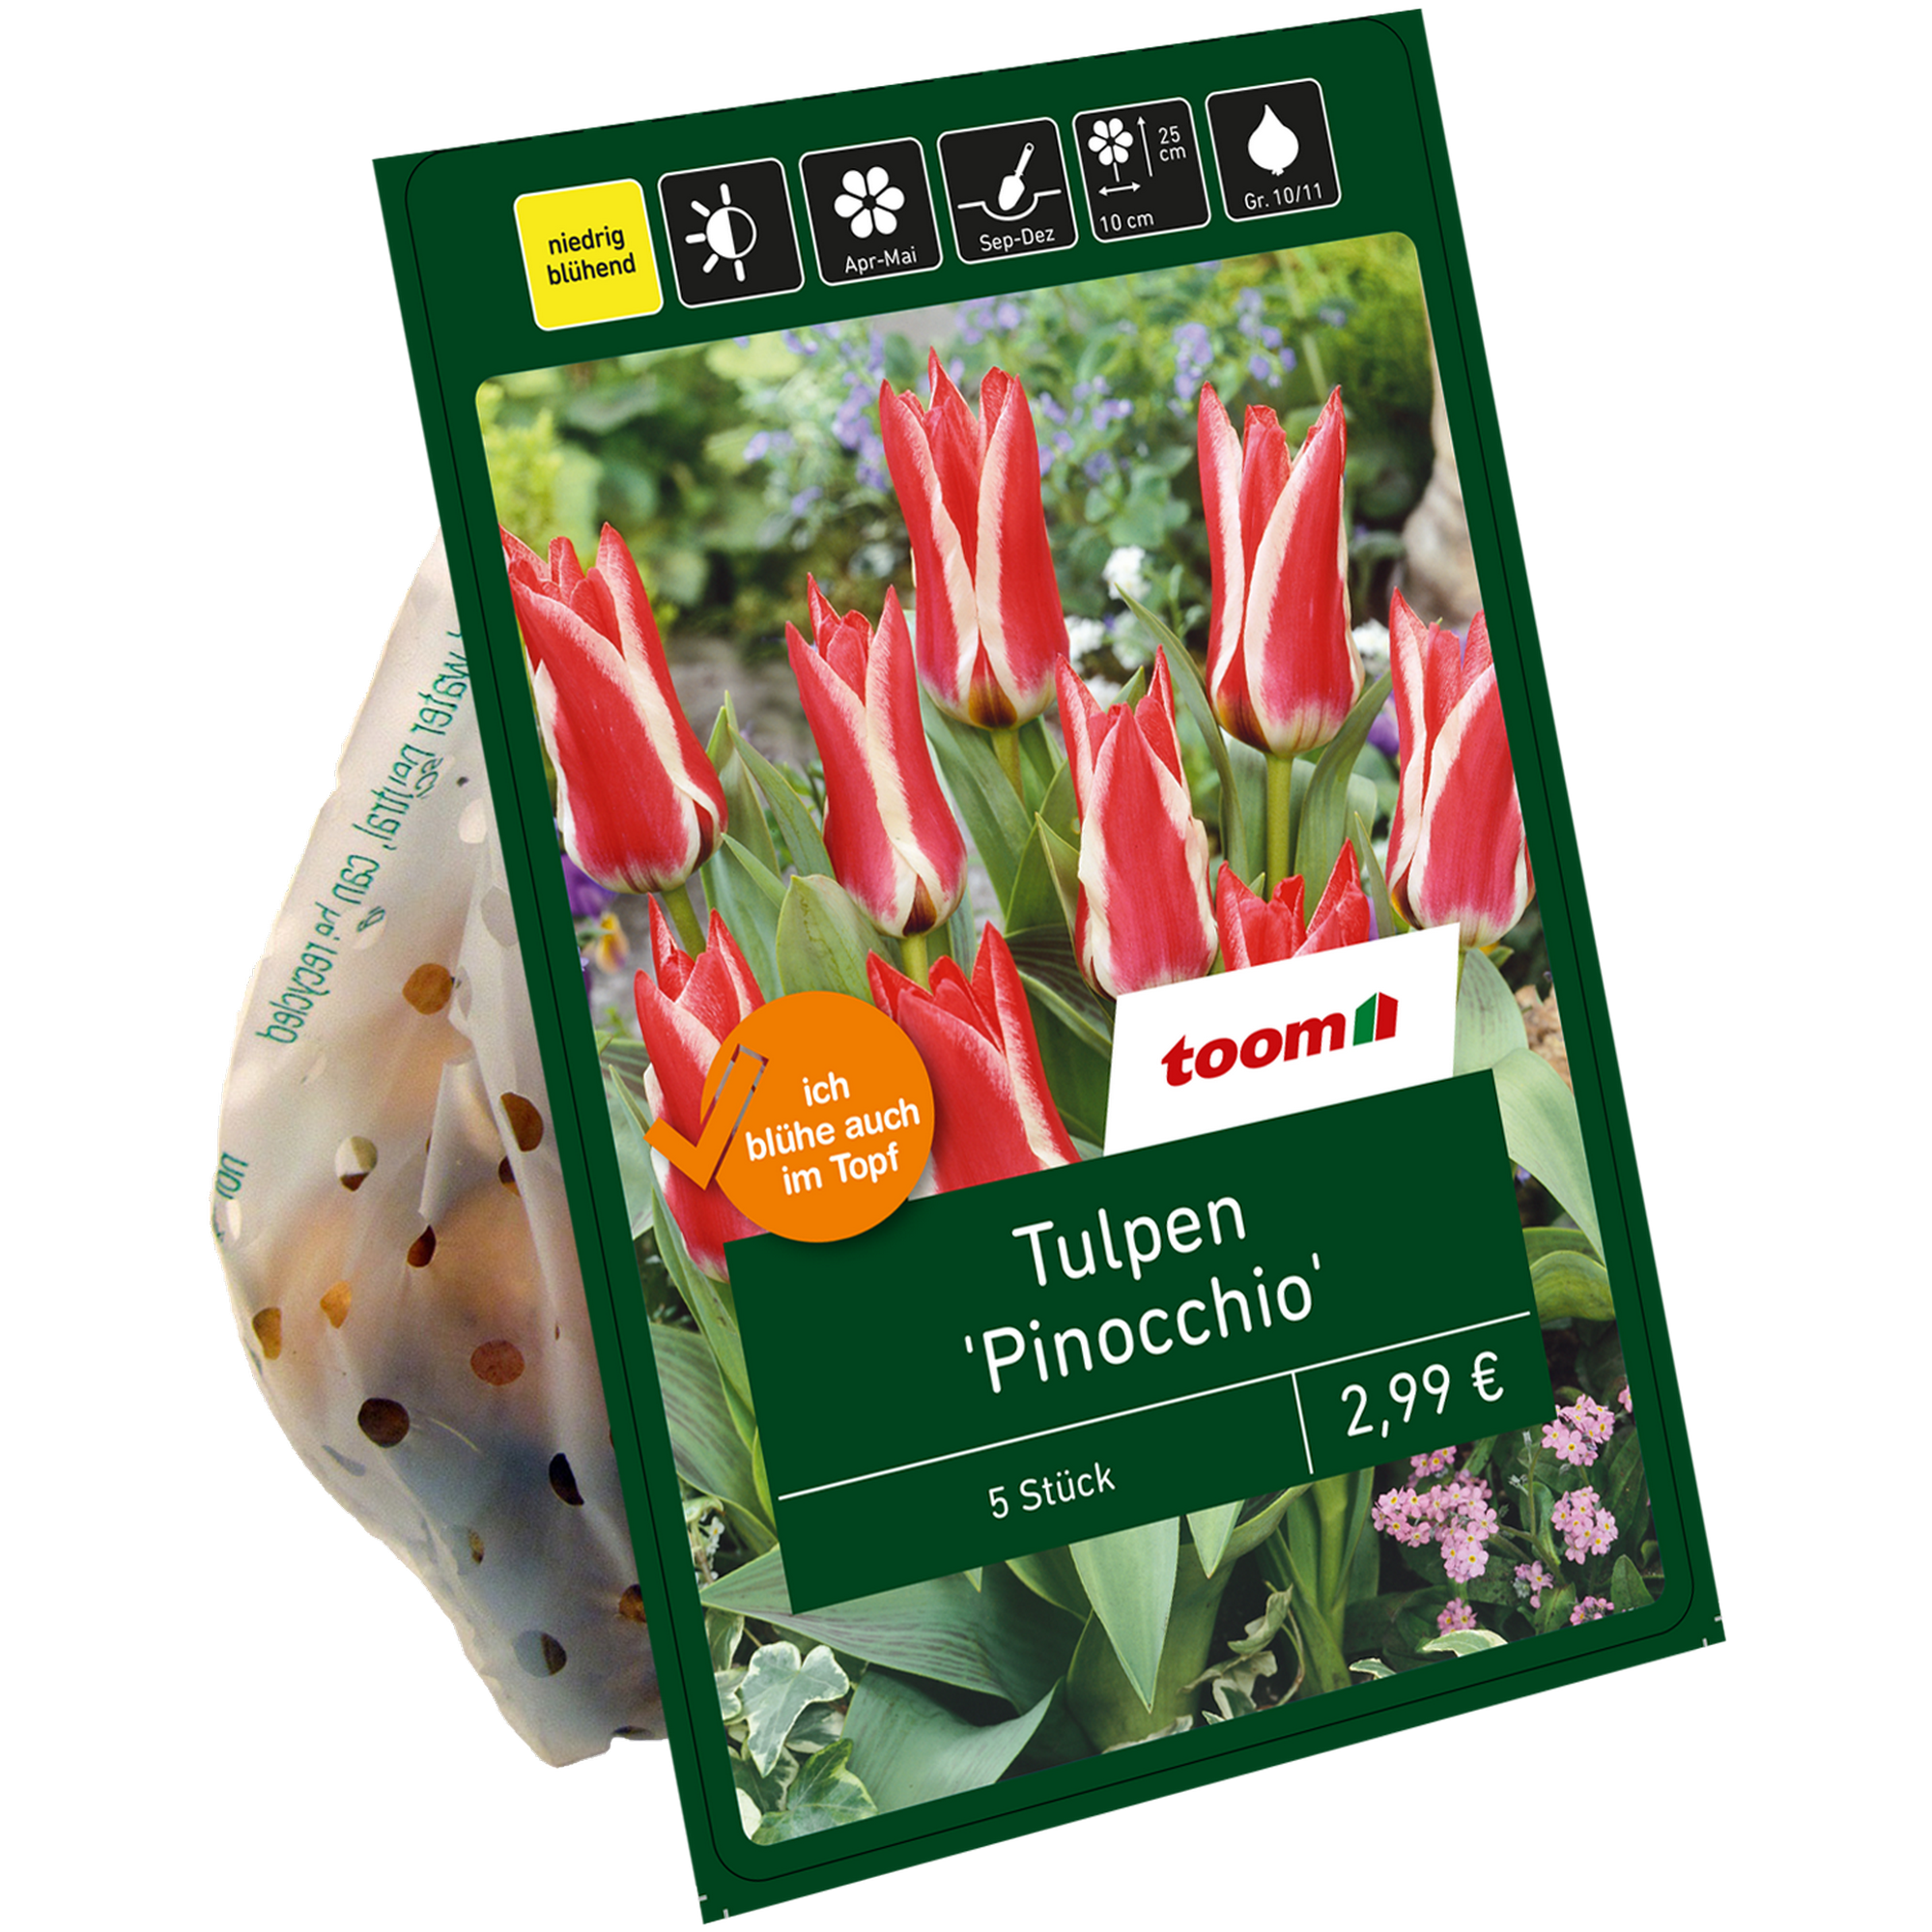 Tulpen 'Pinocchio' rot-weiß 6 Zwiebeln + product picture